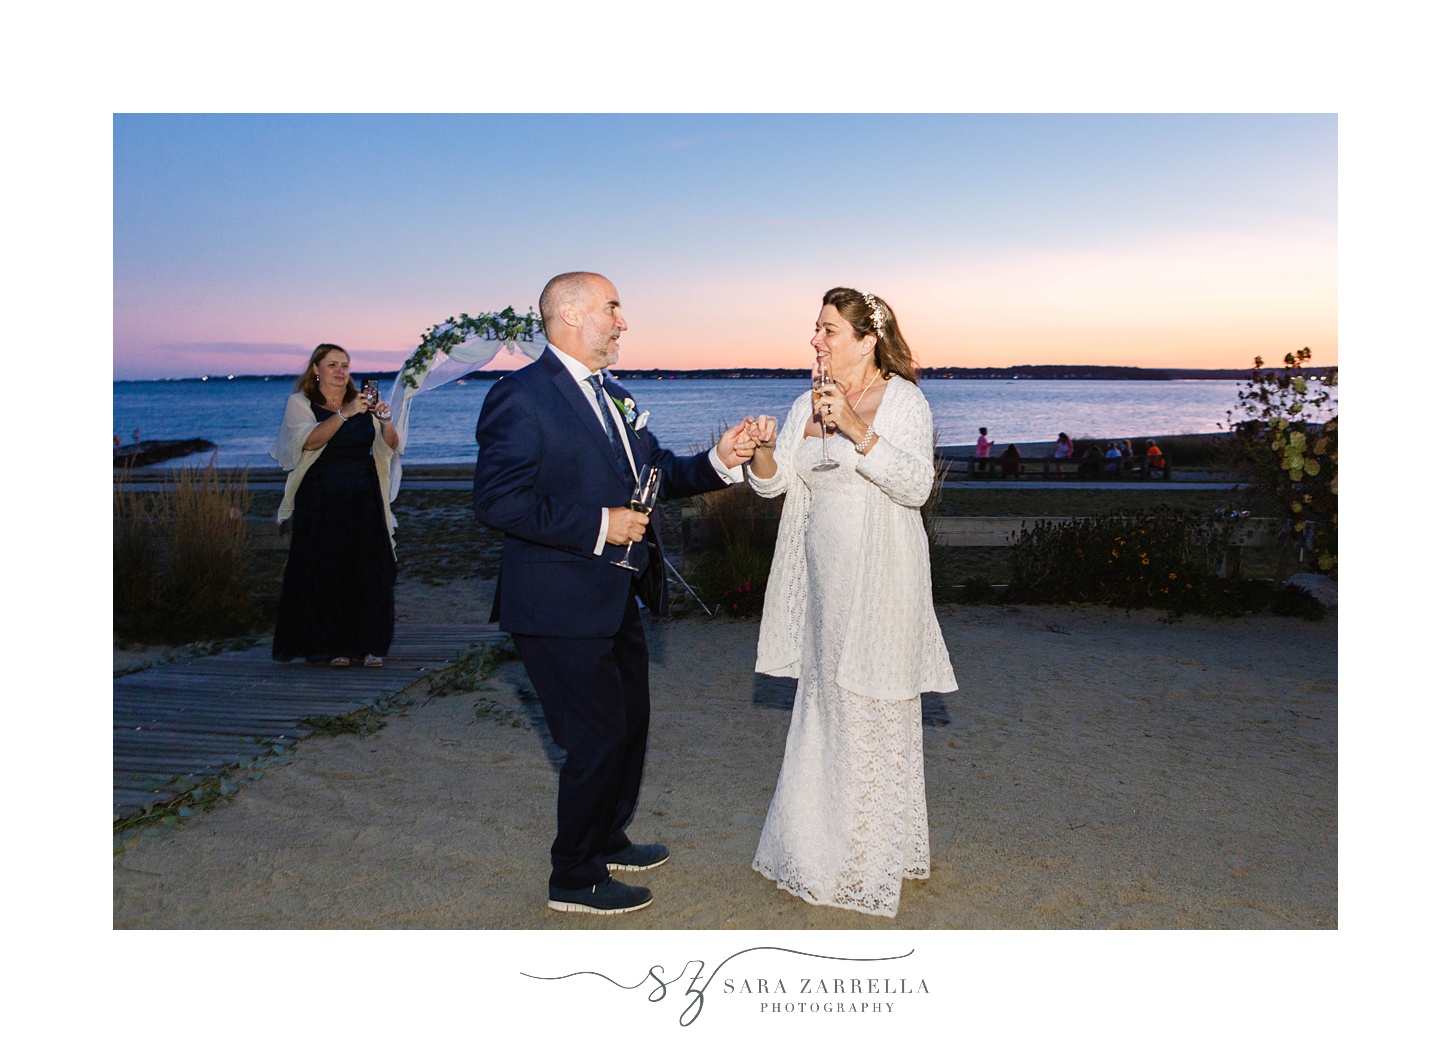 newlyweds dance on beach during wedding reception